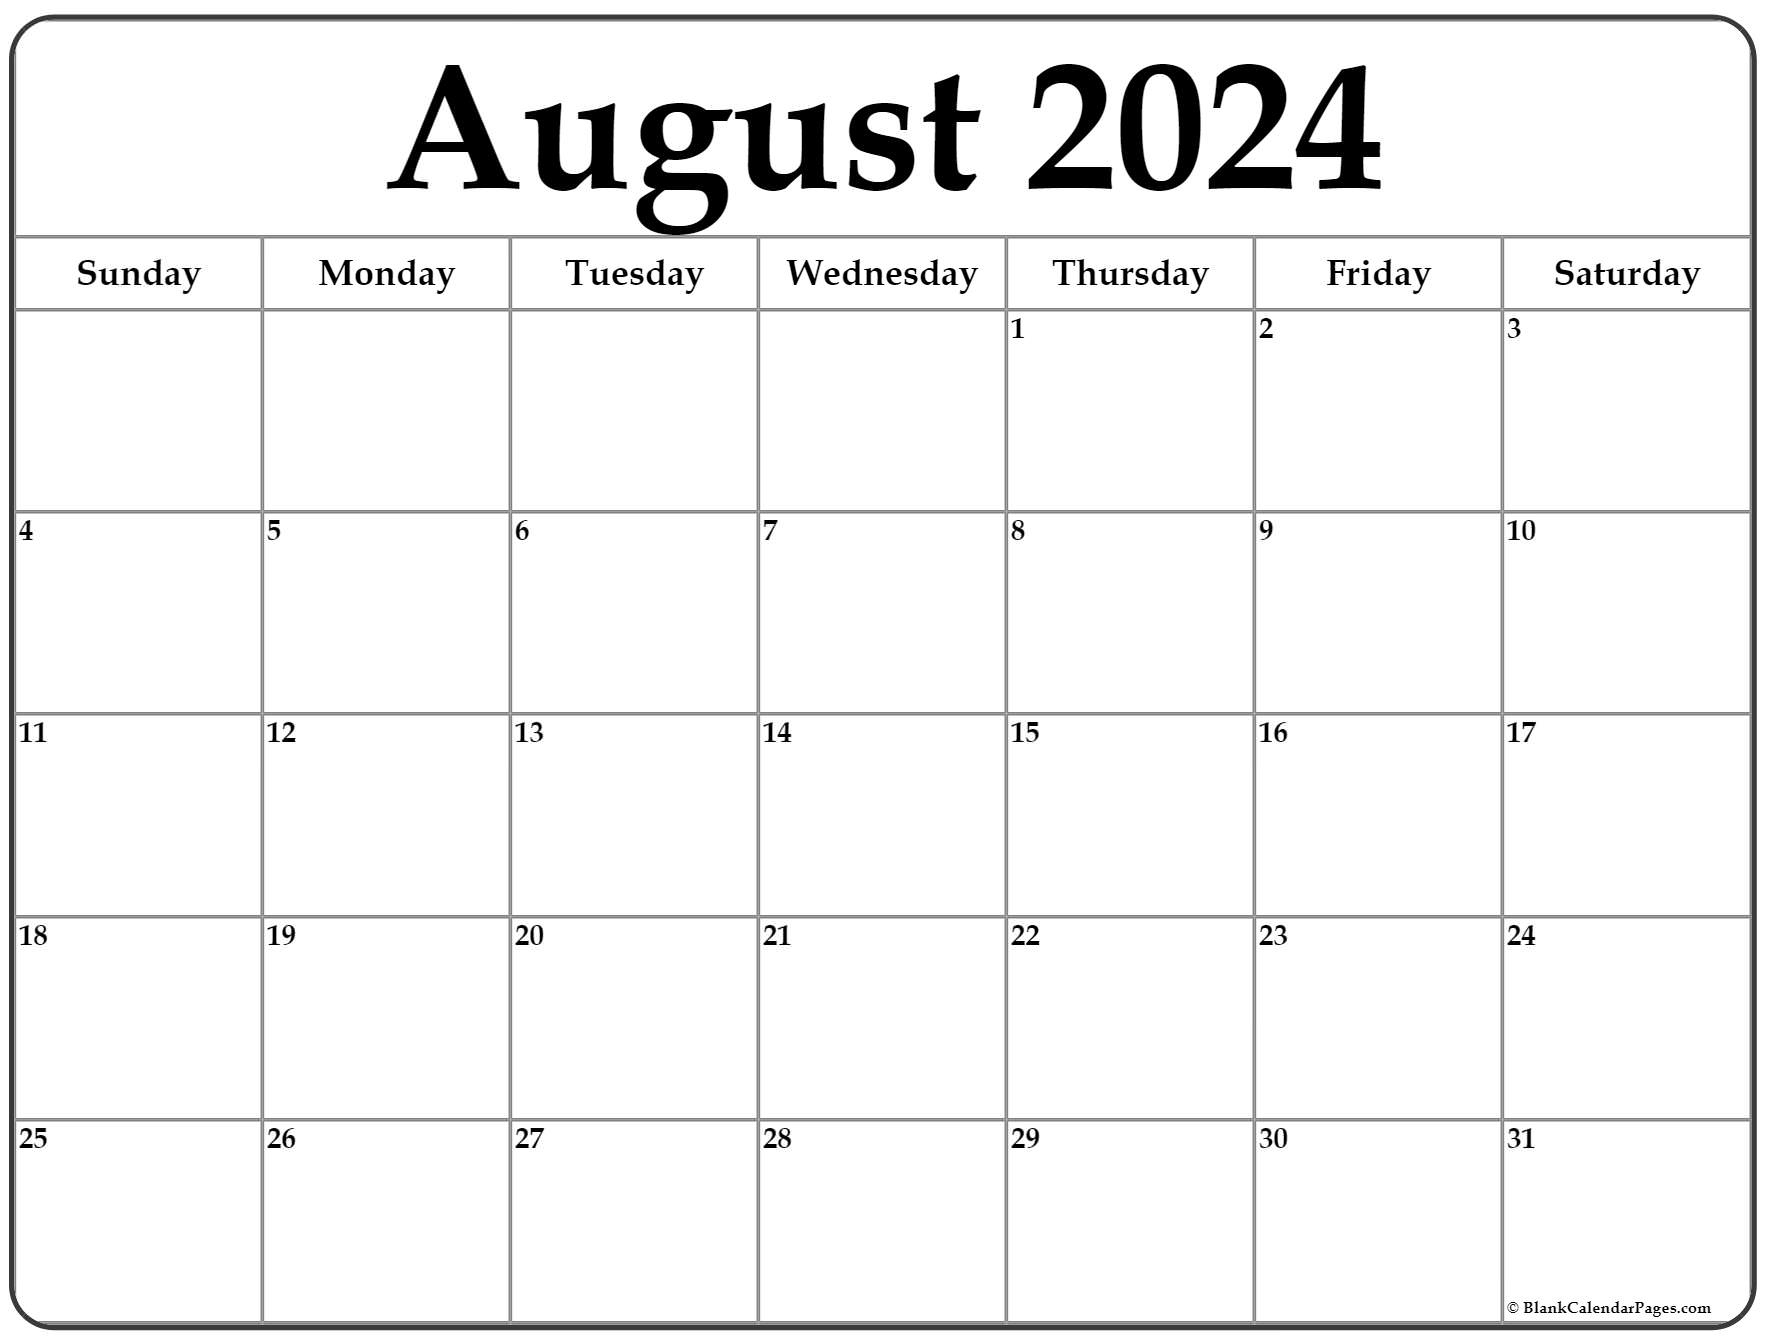 August 2024 Calendar | Free Printable Calendar throughout Free Printable August 2024 Calendar With Lines